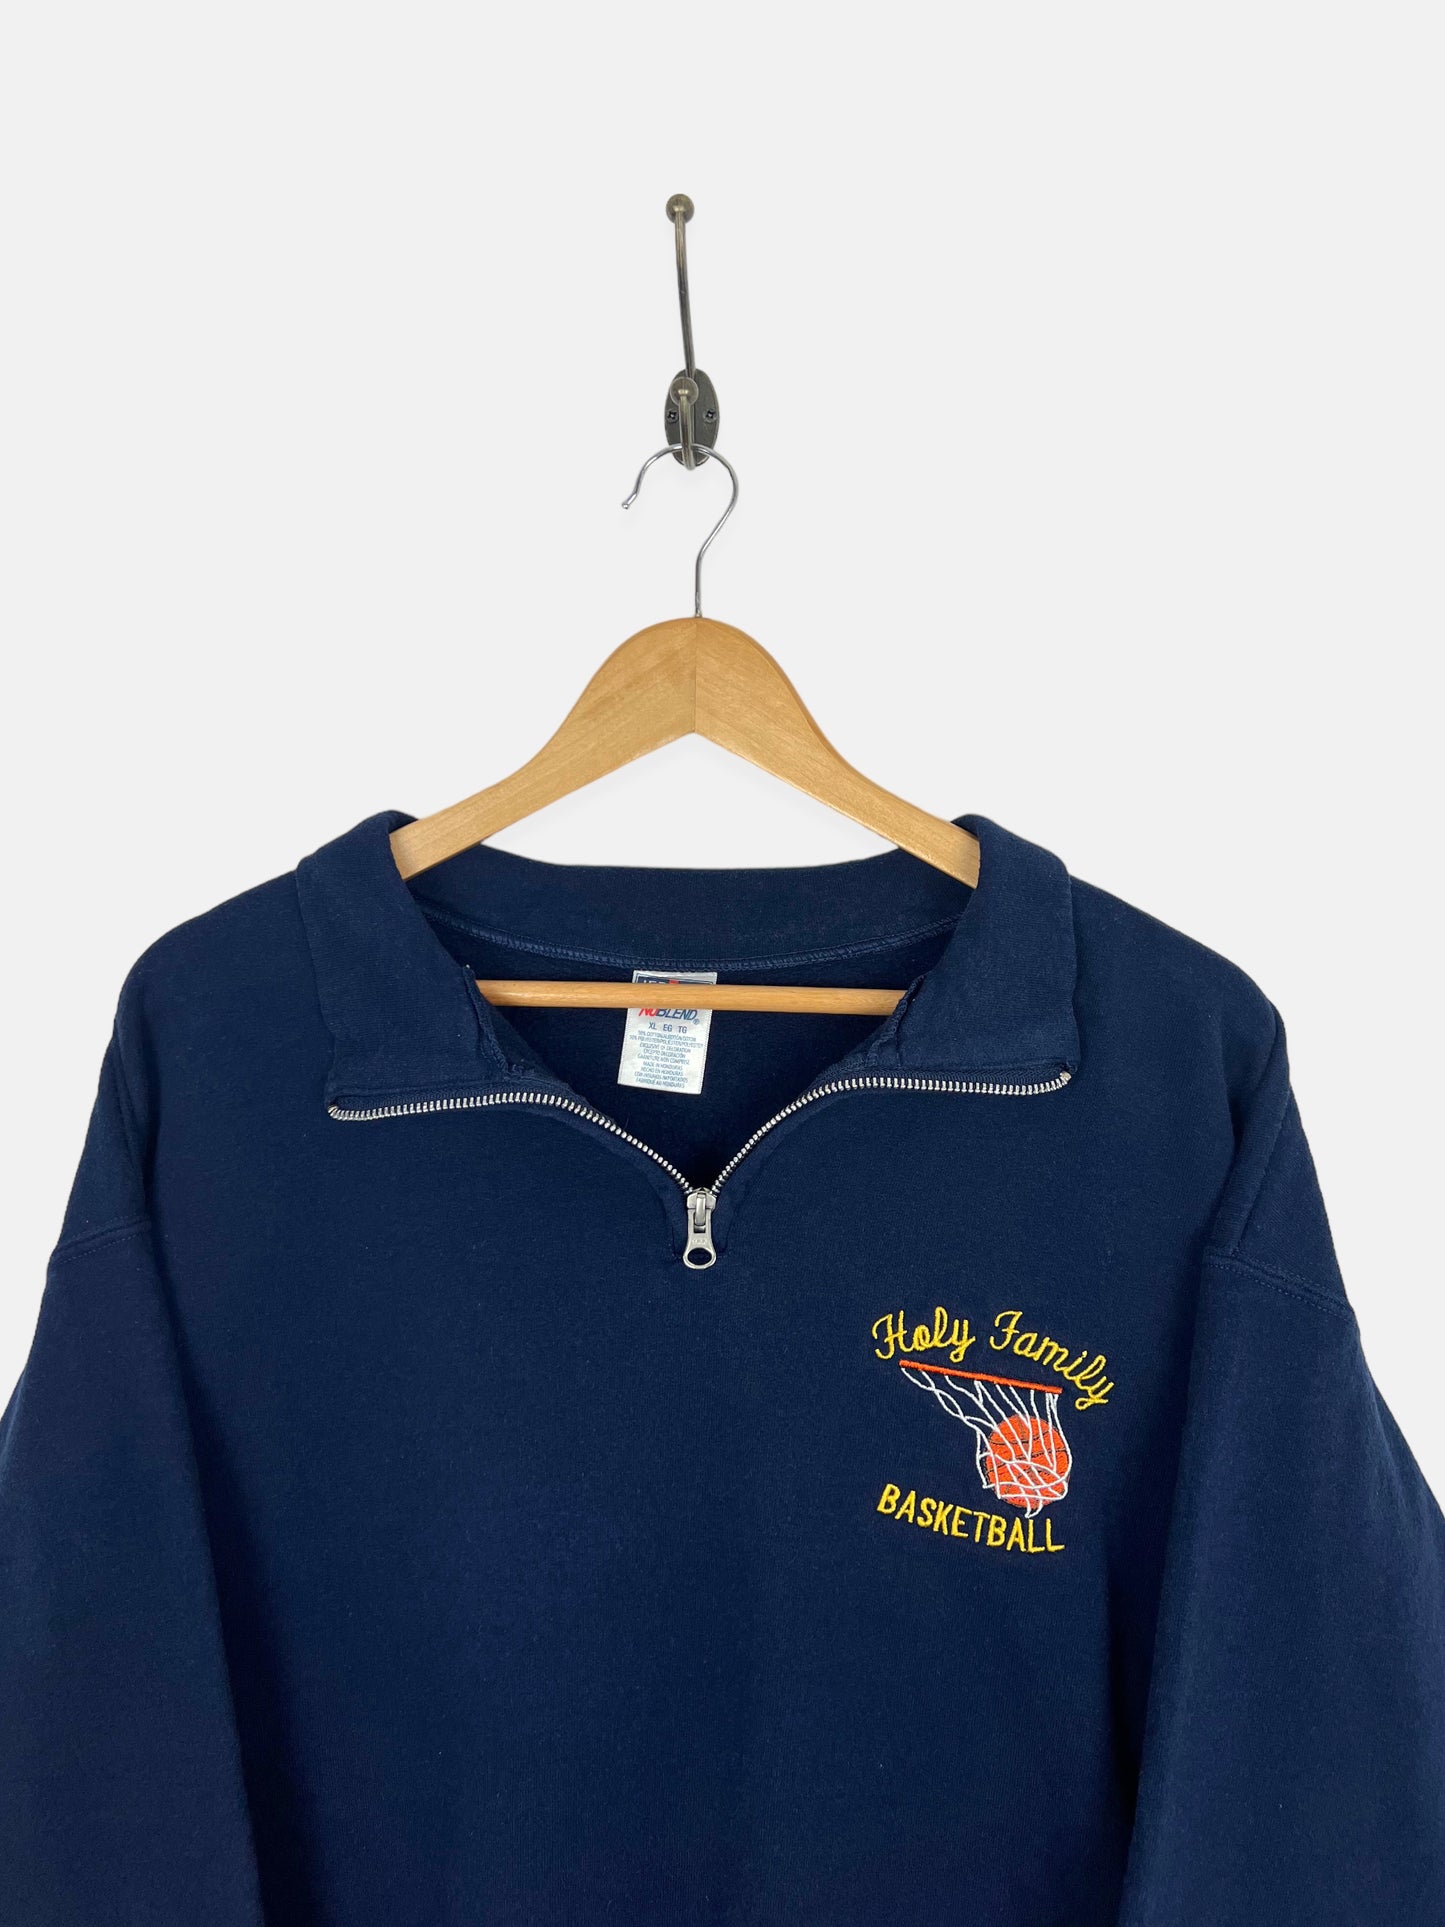 90's Holy Family Basketball Embroidered Vintage Quarterzip Sweatshirt Size XL